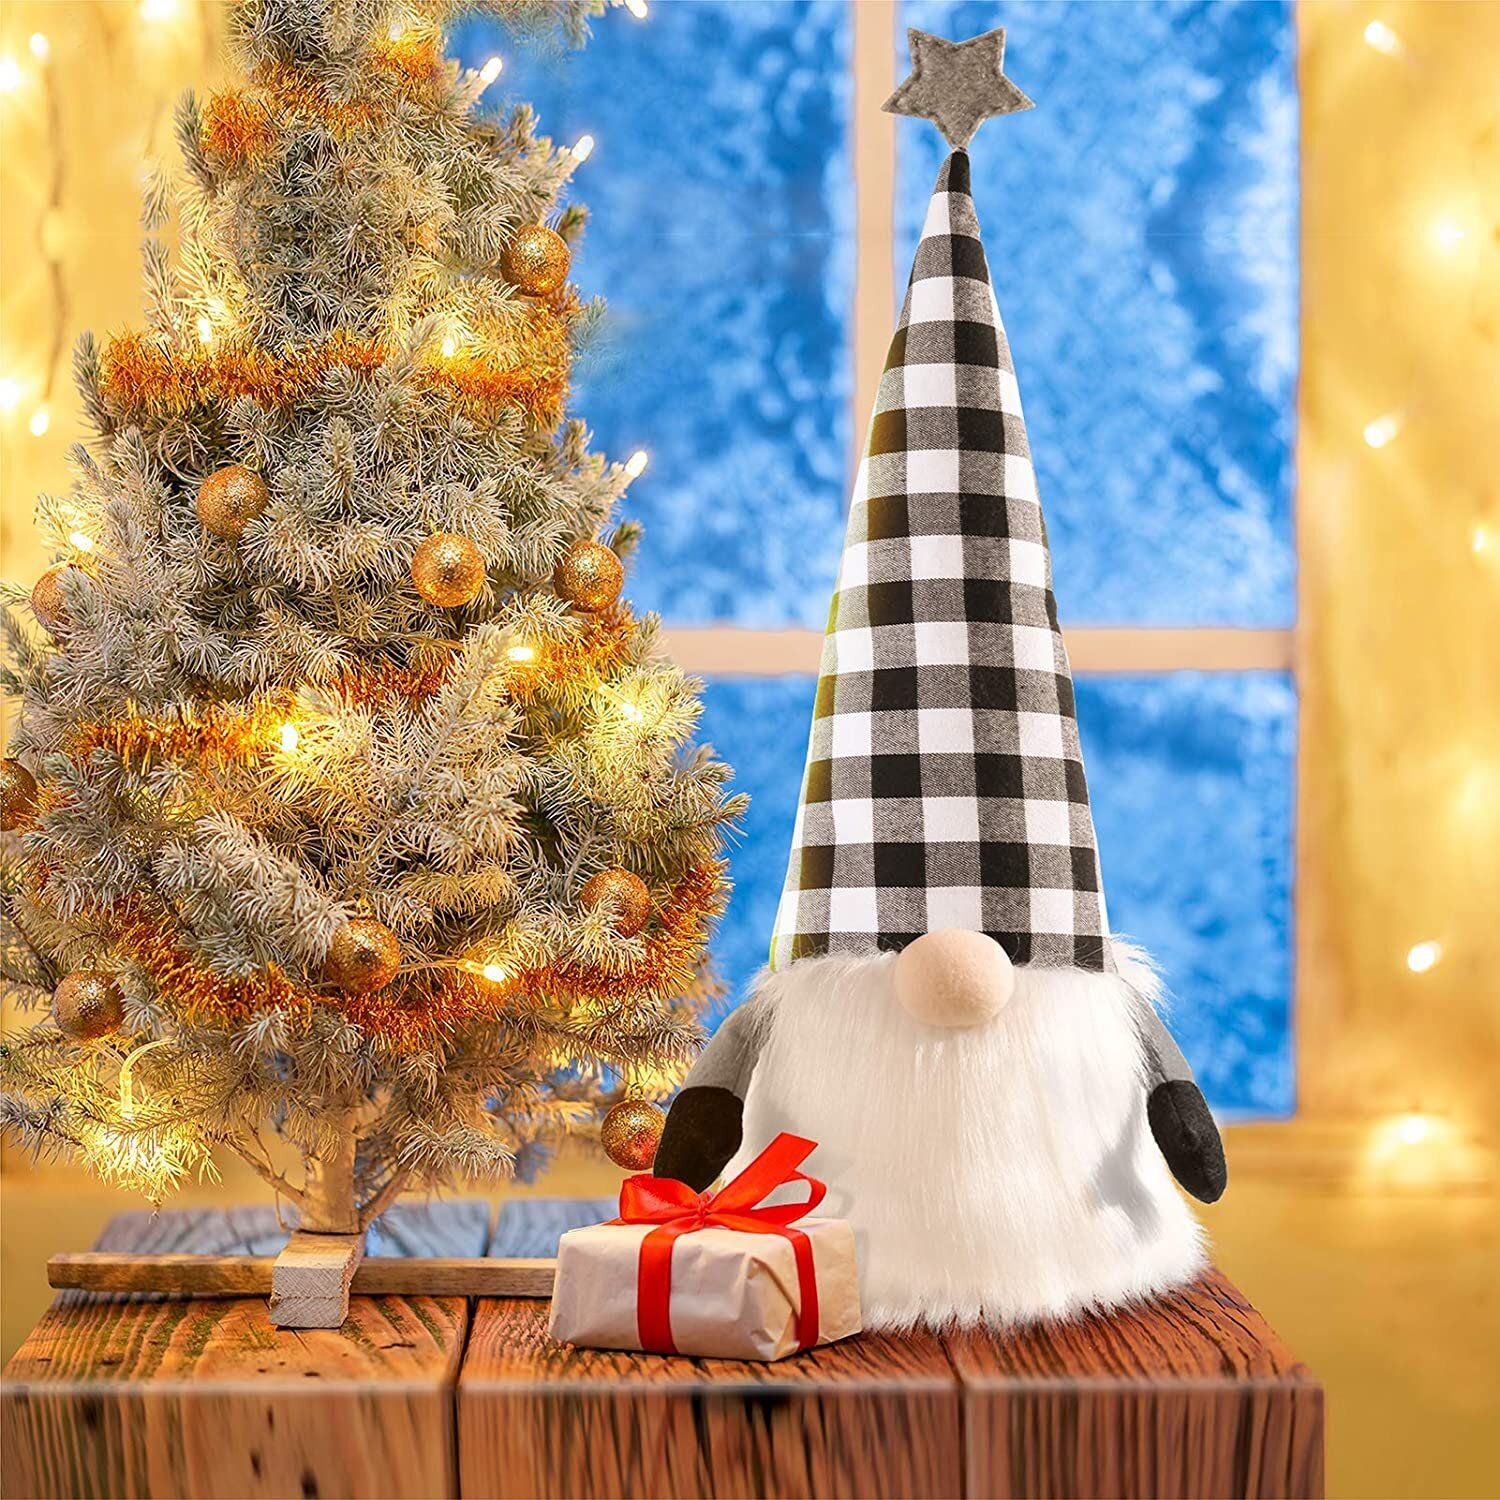 Bafeil Christmas Tree Topper,Gnome Christmas Decorations,Christmas